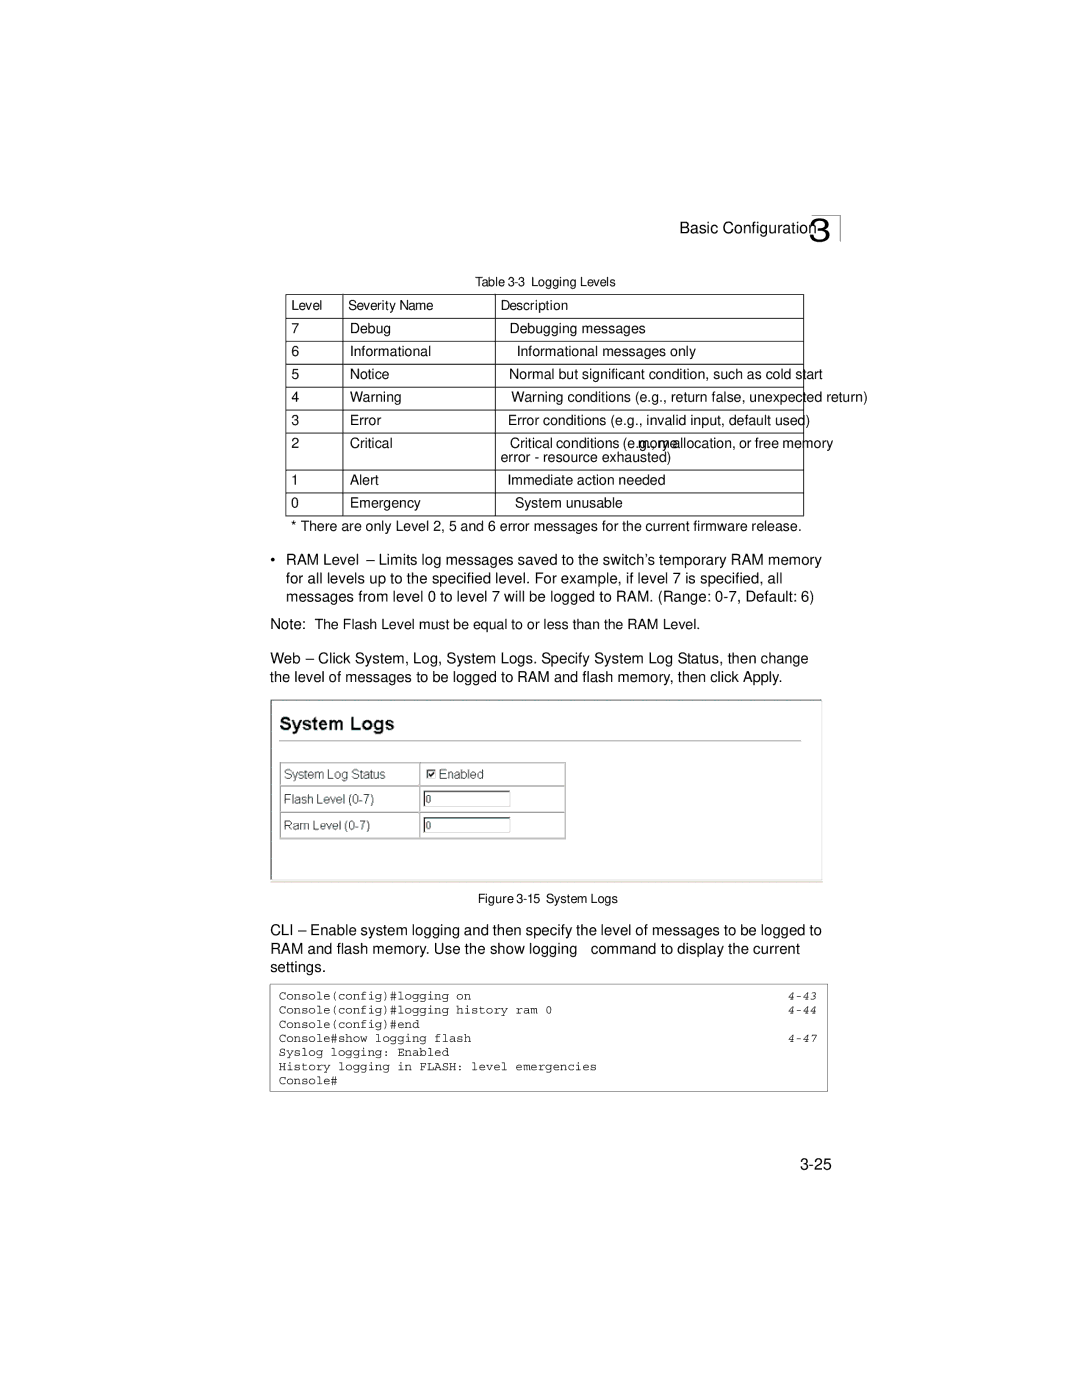 LevelOne GSW-2692 manual Logging Levels, Level Severity Name Description 